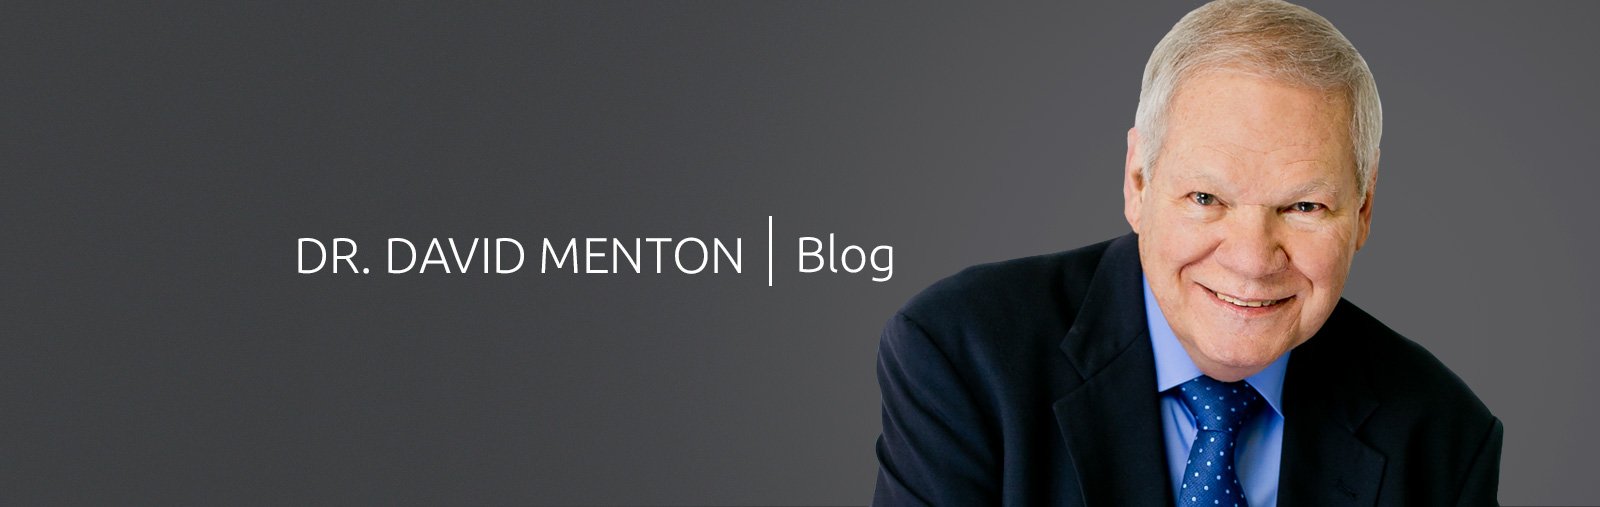 David Menton Blog